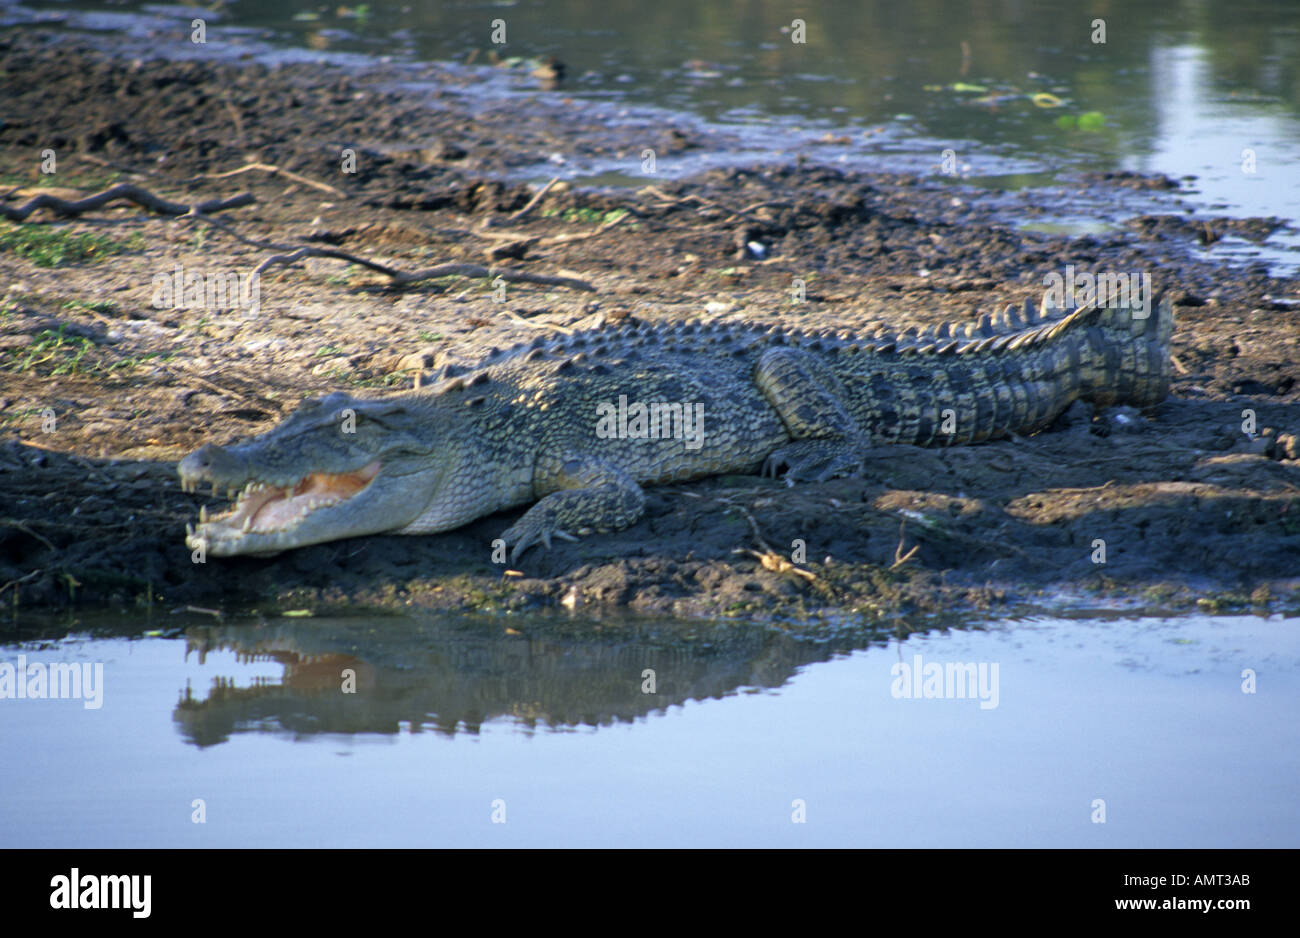 Saltwater crocodile, Kakadu National park, Northern Territory, Australia Stock Photo